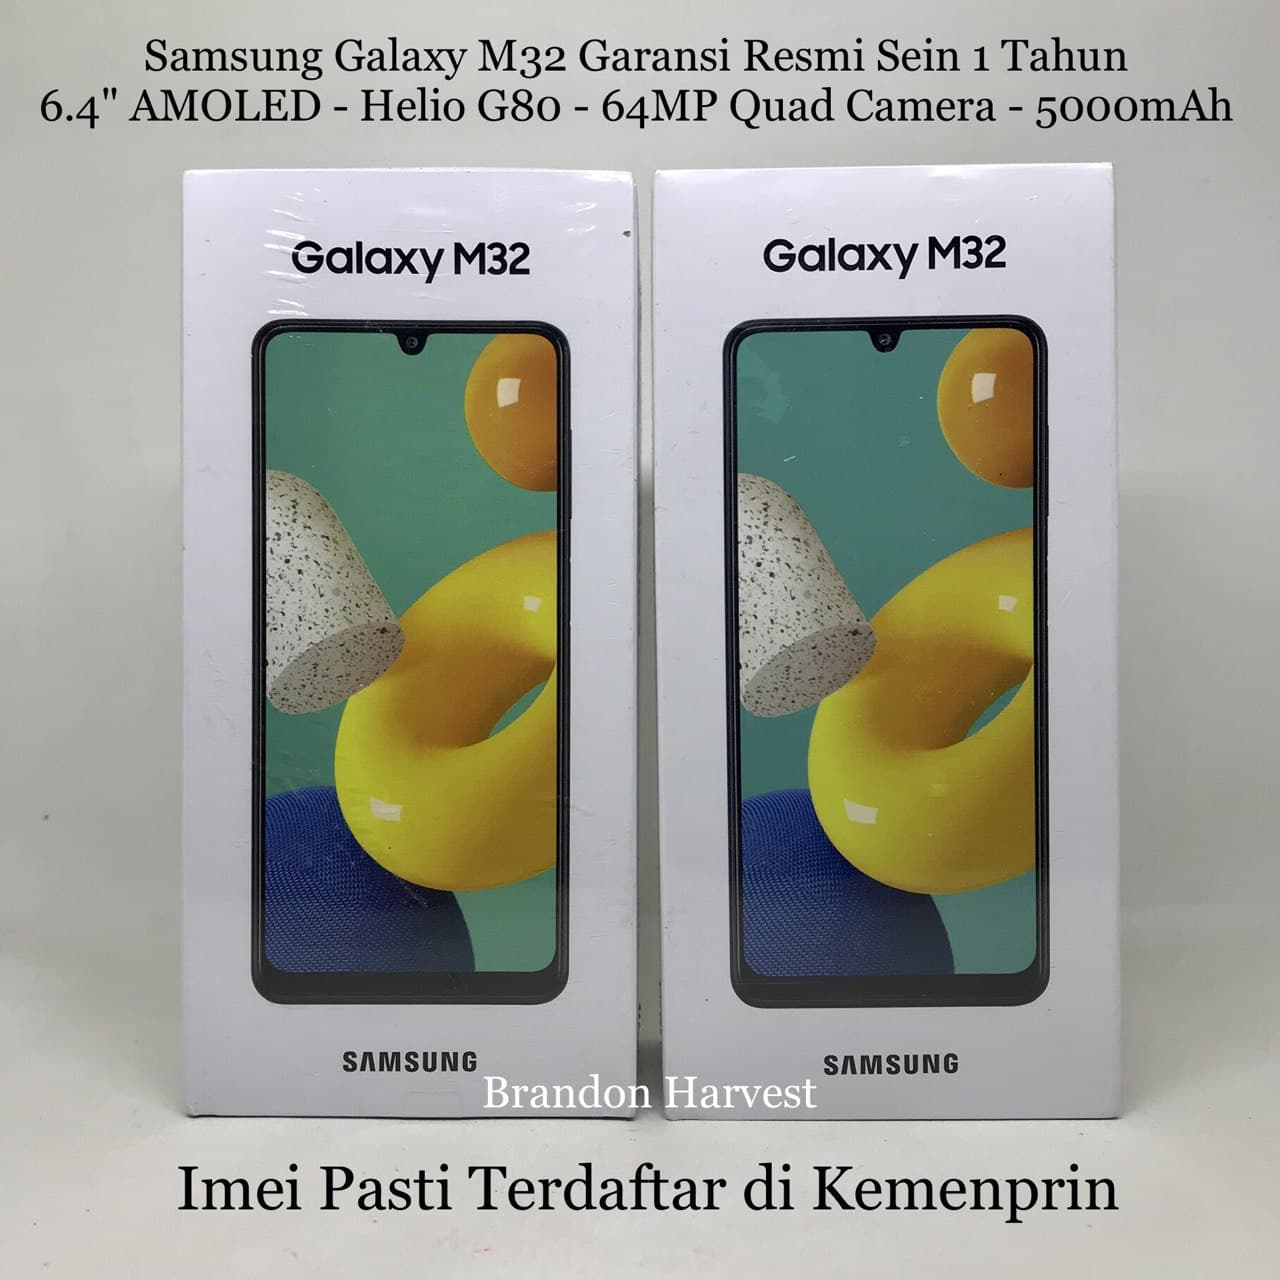 Samsung Galaxy M32 [8GB+128GB] MediaTek Helio G80 - 64MP Quad Camera - 6.4" Super AMOLED - 5000mAh Garansi Resmi Sein 1 Tahun